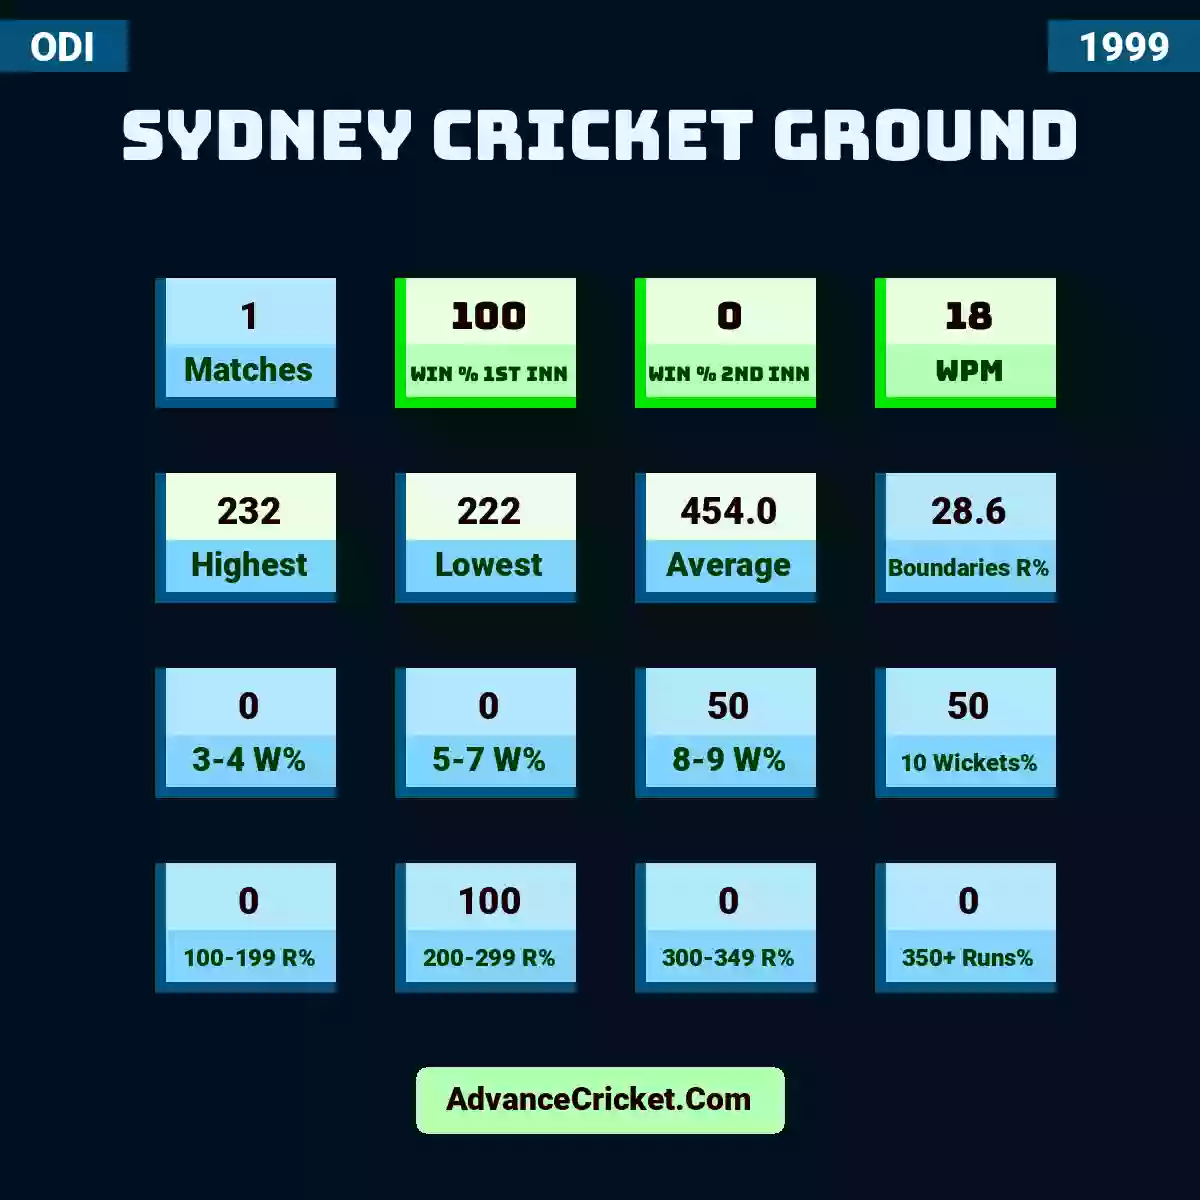 Image showing Sydney Cricket Ground with Matches: 1, Win % 1st Inn: 100, Win % 2nd Inn: 0, WPM: 18, Highest: 232, Lowest: 222, Average: 454.0, Boundaries R%: 28.6, 3-4 W%: 0, 5-7 W%: 0, 8-9 W%: 50, 10 Wickets%: 50, 100-199 R%: 0, 200-299 R%: 100, 300-349 R%: 0, 350+ Runs%: 0.